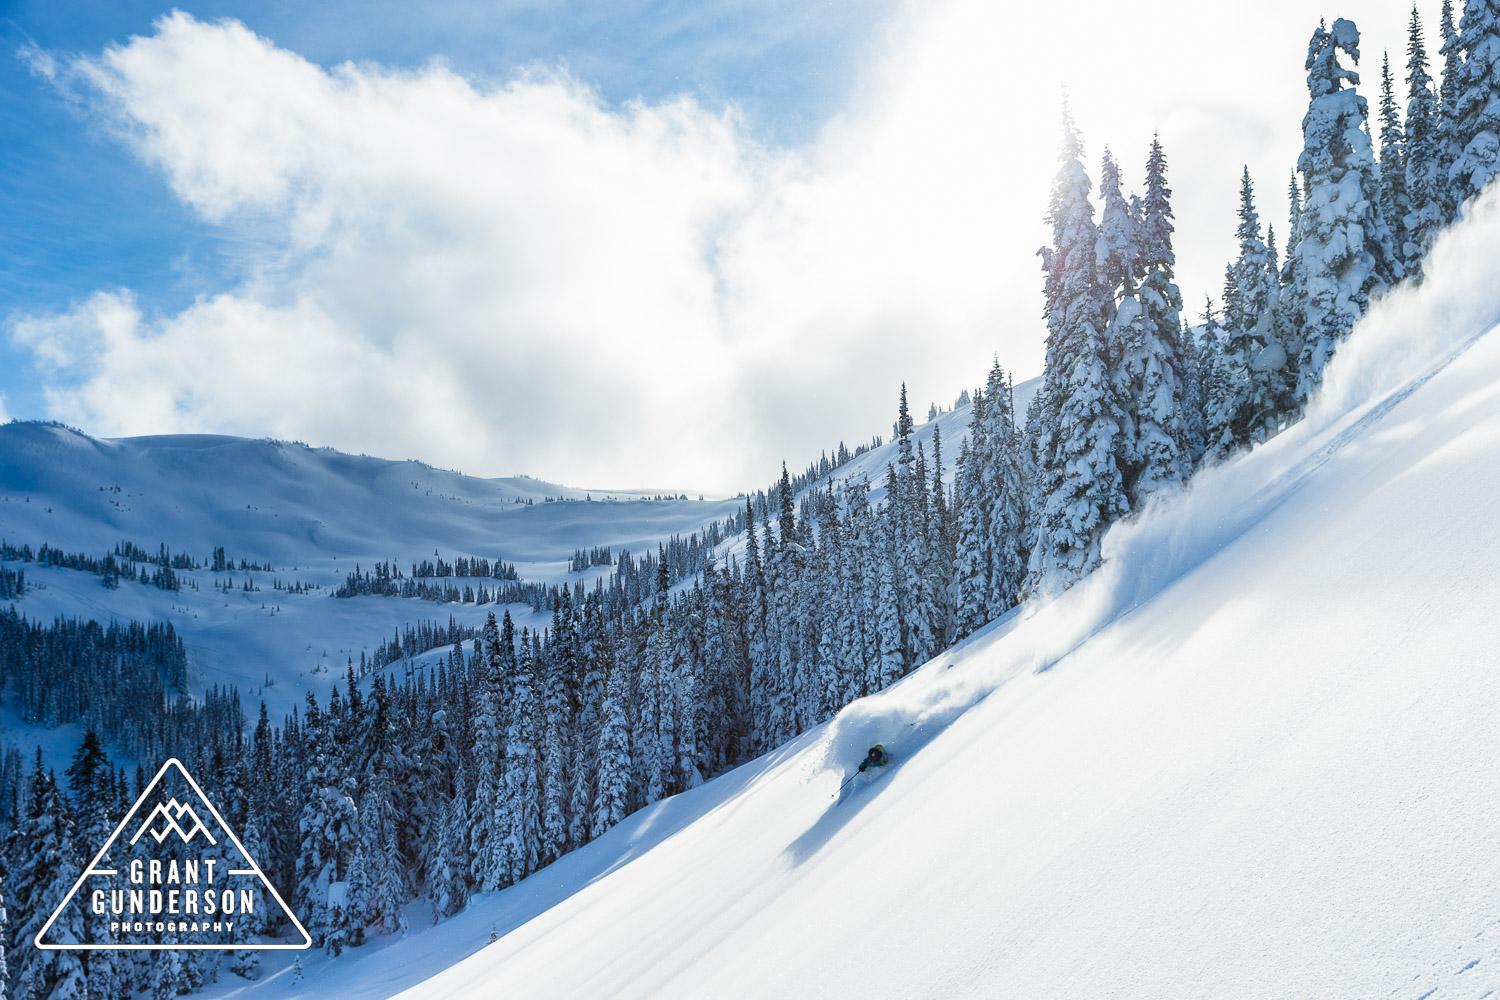 Barclay DesJardins skiing whistler mountian on a powder day